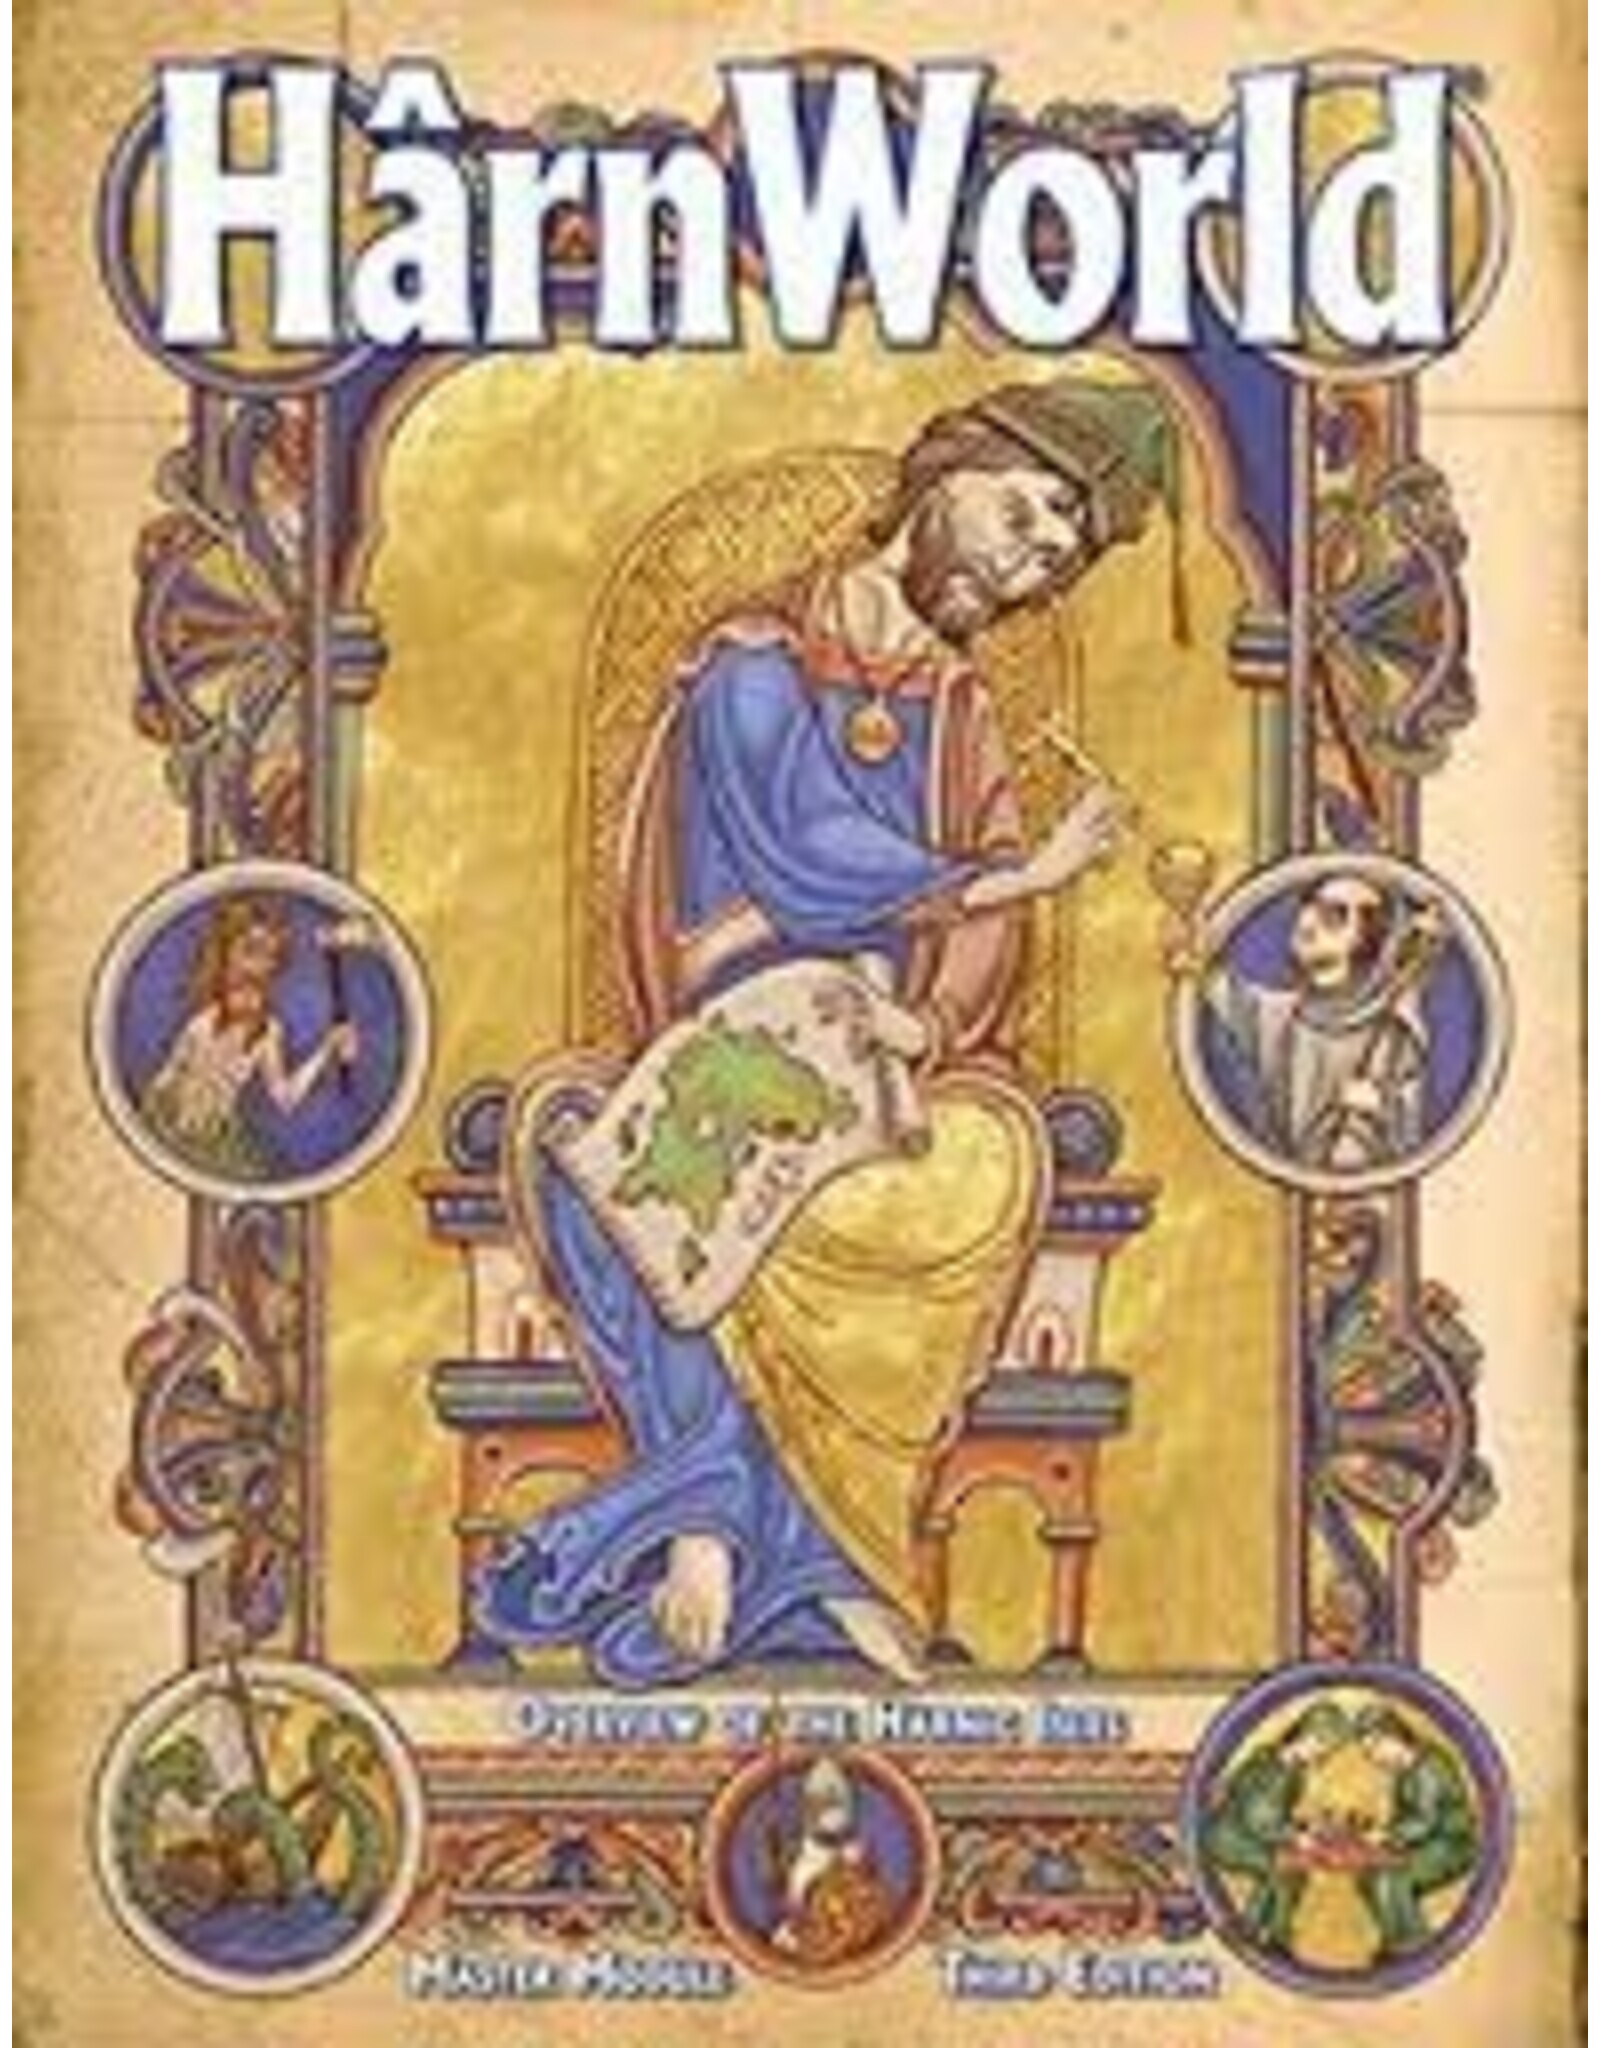 Harnworld - Medieval RPG Fantasy